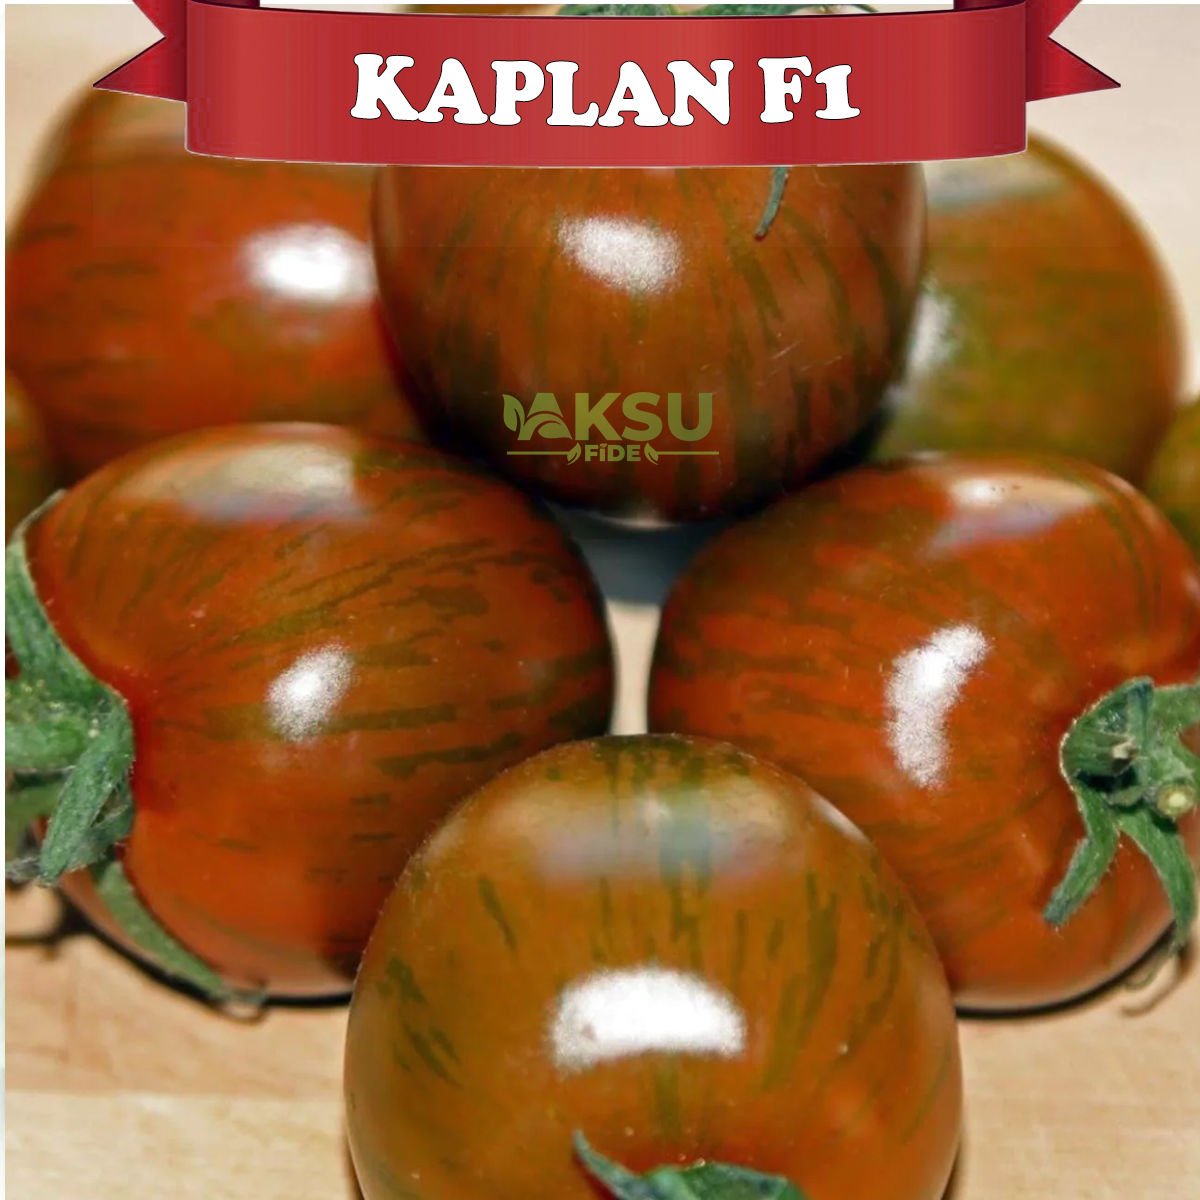 Kaplan F1 - Kahverengi Kokteyl Domates Fidesi